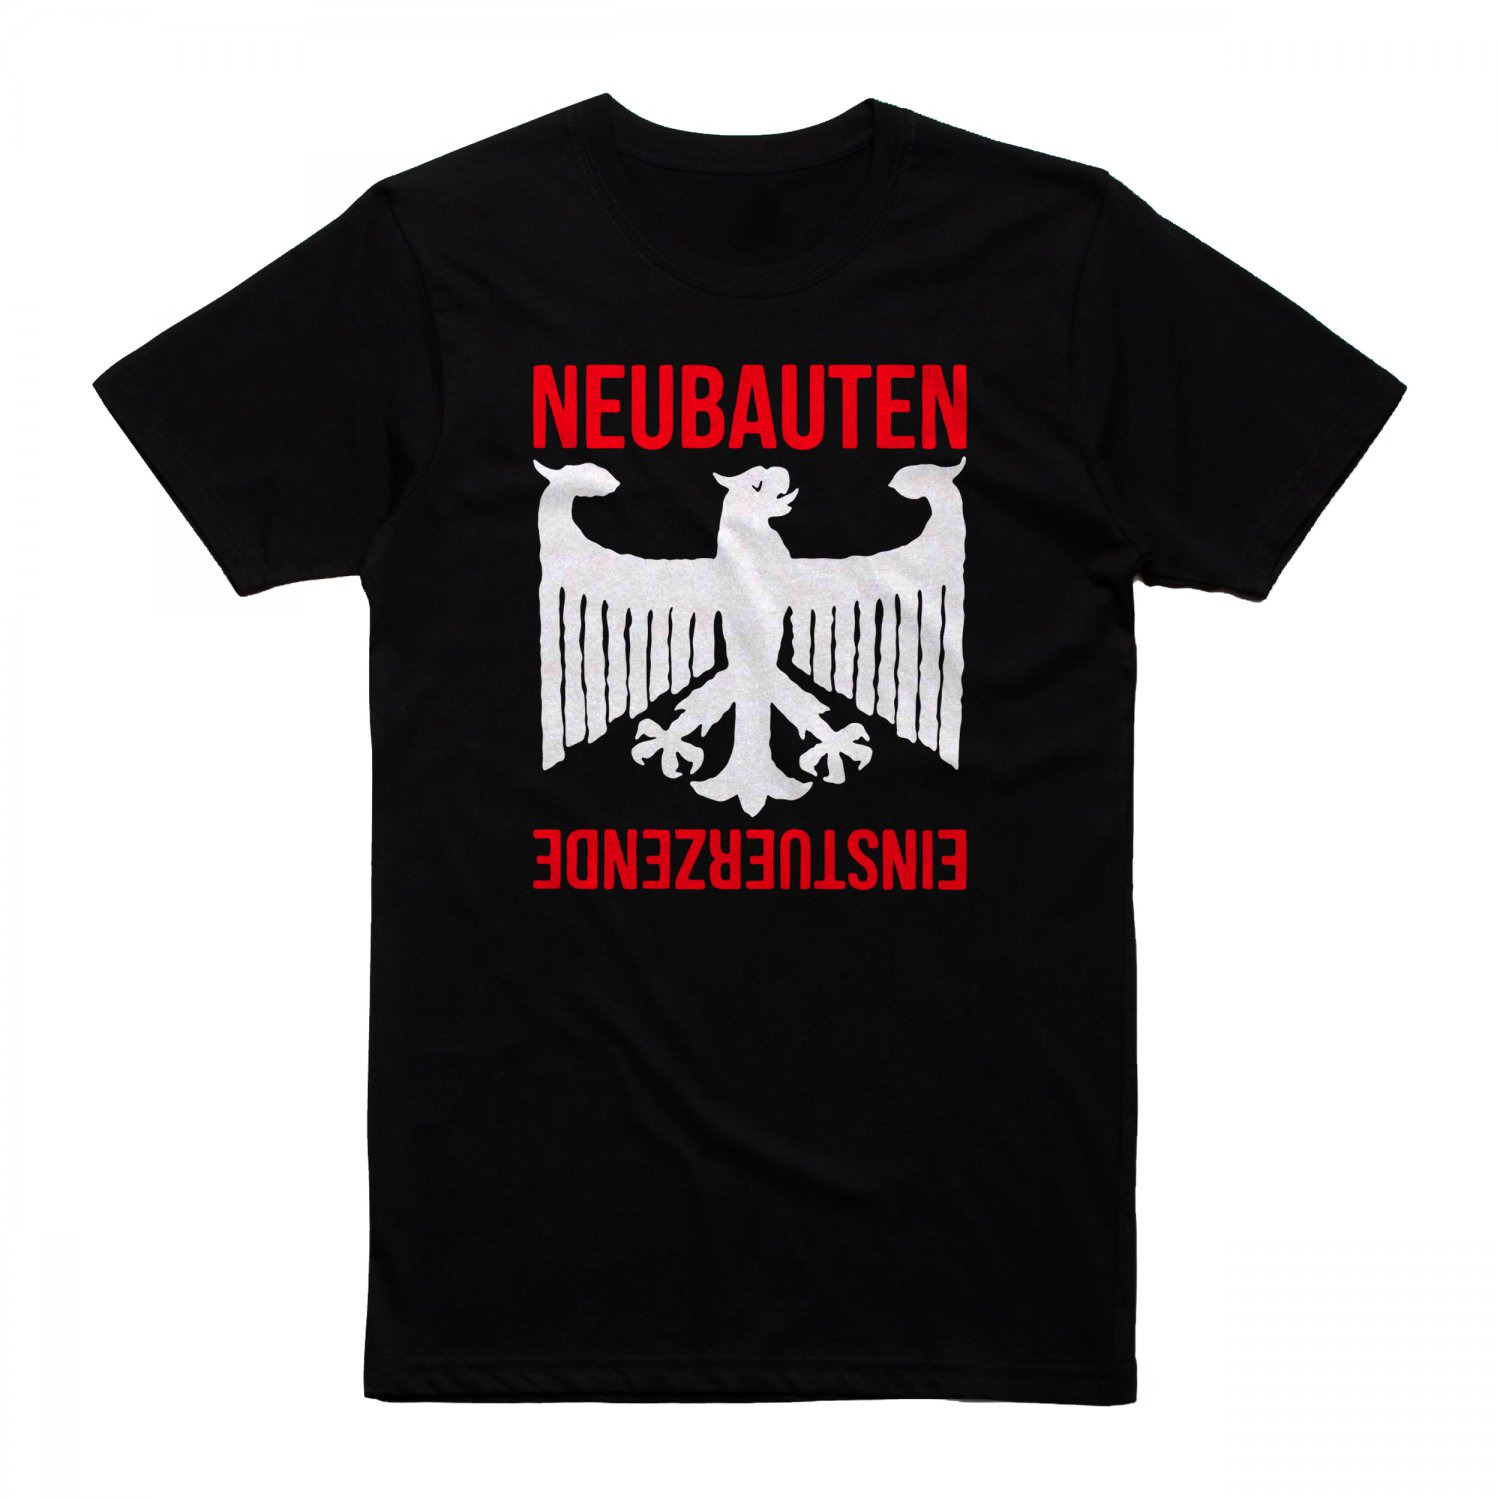 Einsturzende Neubauten Logo Black T-Shirt, Navy T-Shirt